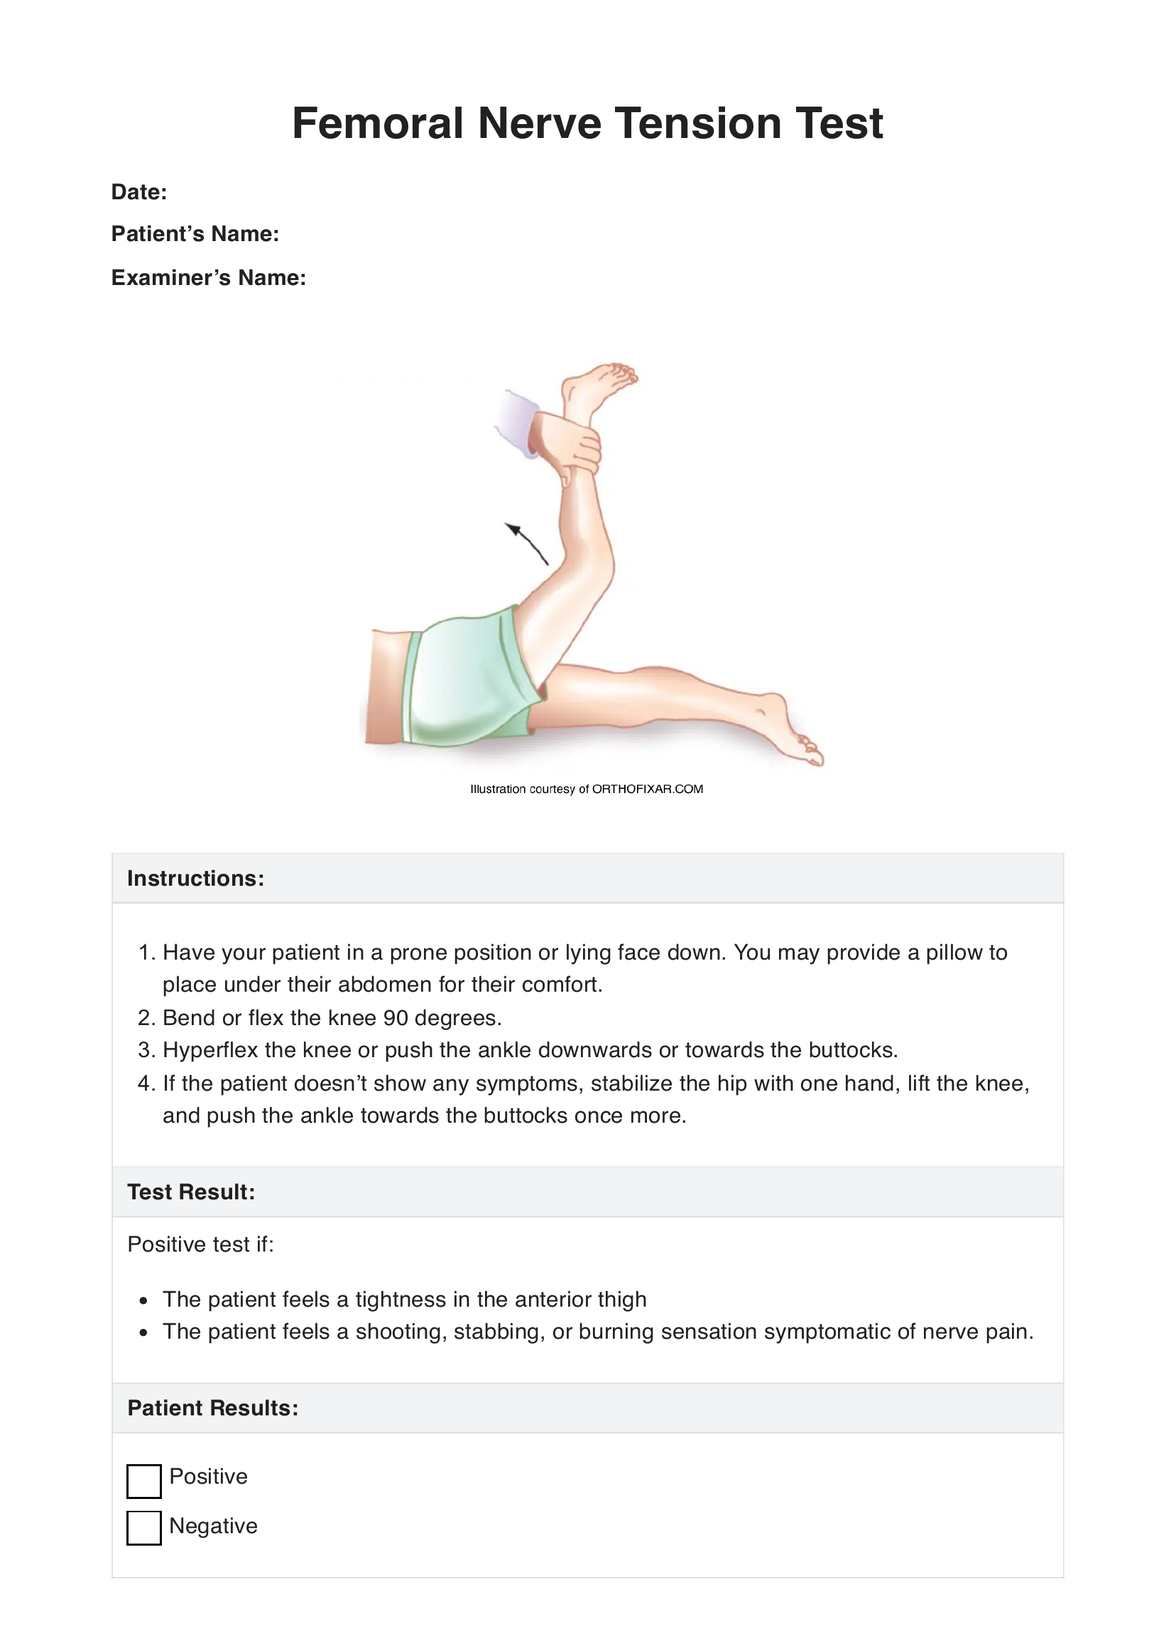 Femoral Nerve Entrapment Test PDF Example